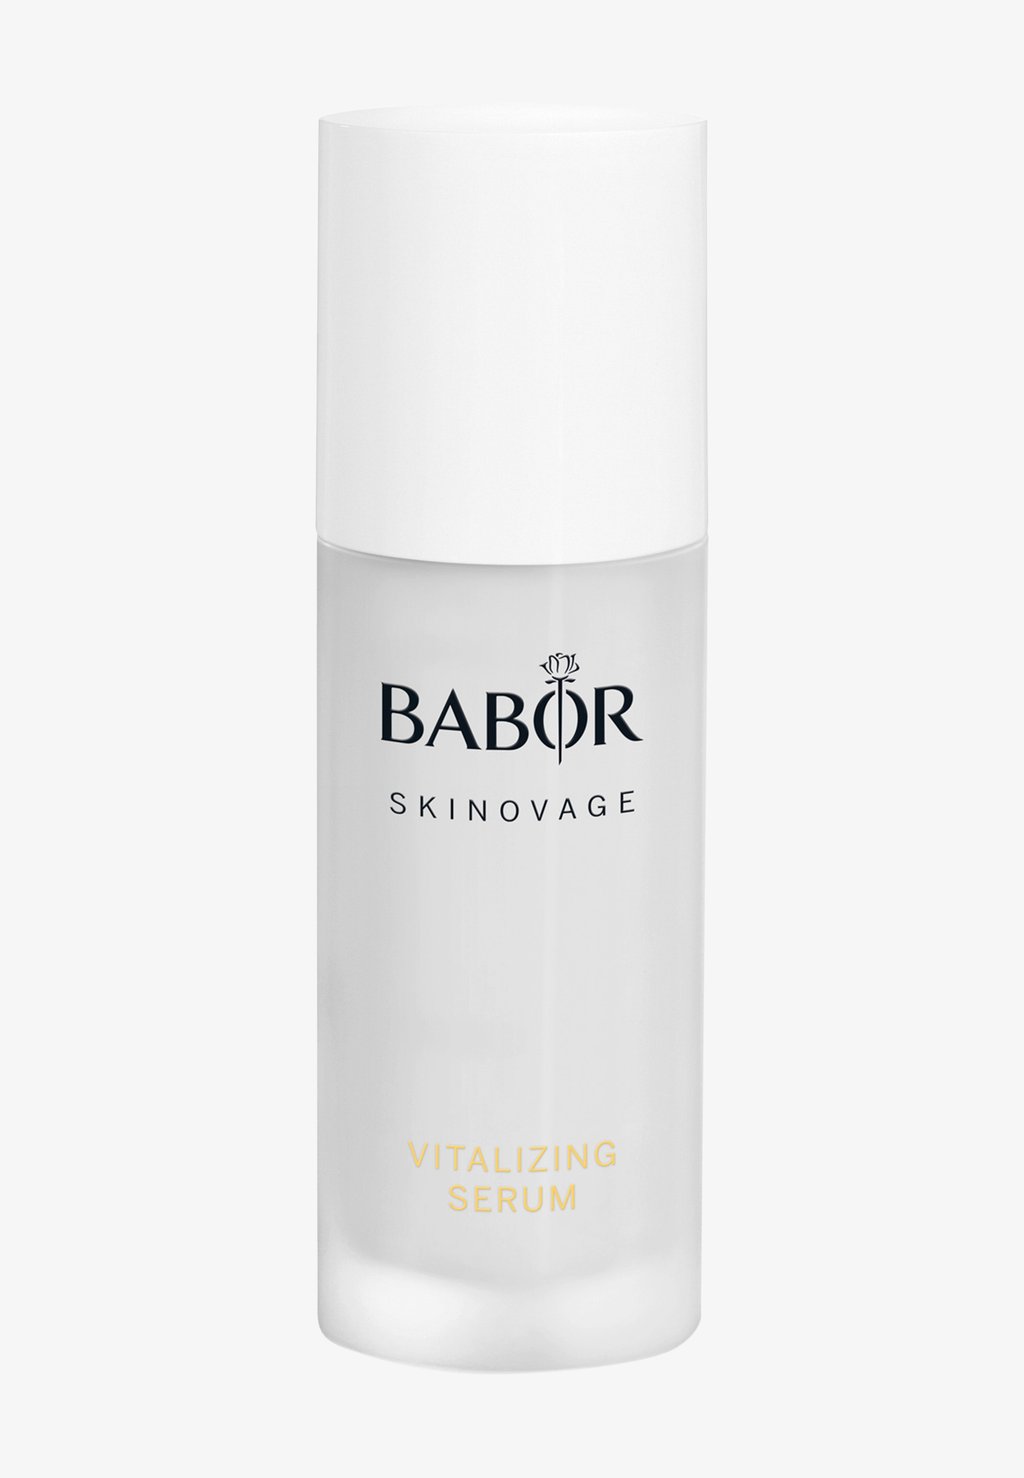 Сыворотка Vitalizing Serum BABOR сыворотка для лица babor vitalizing serum 30 мл